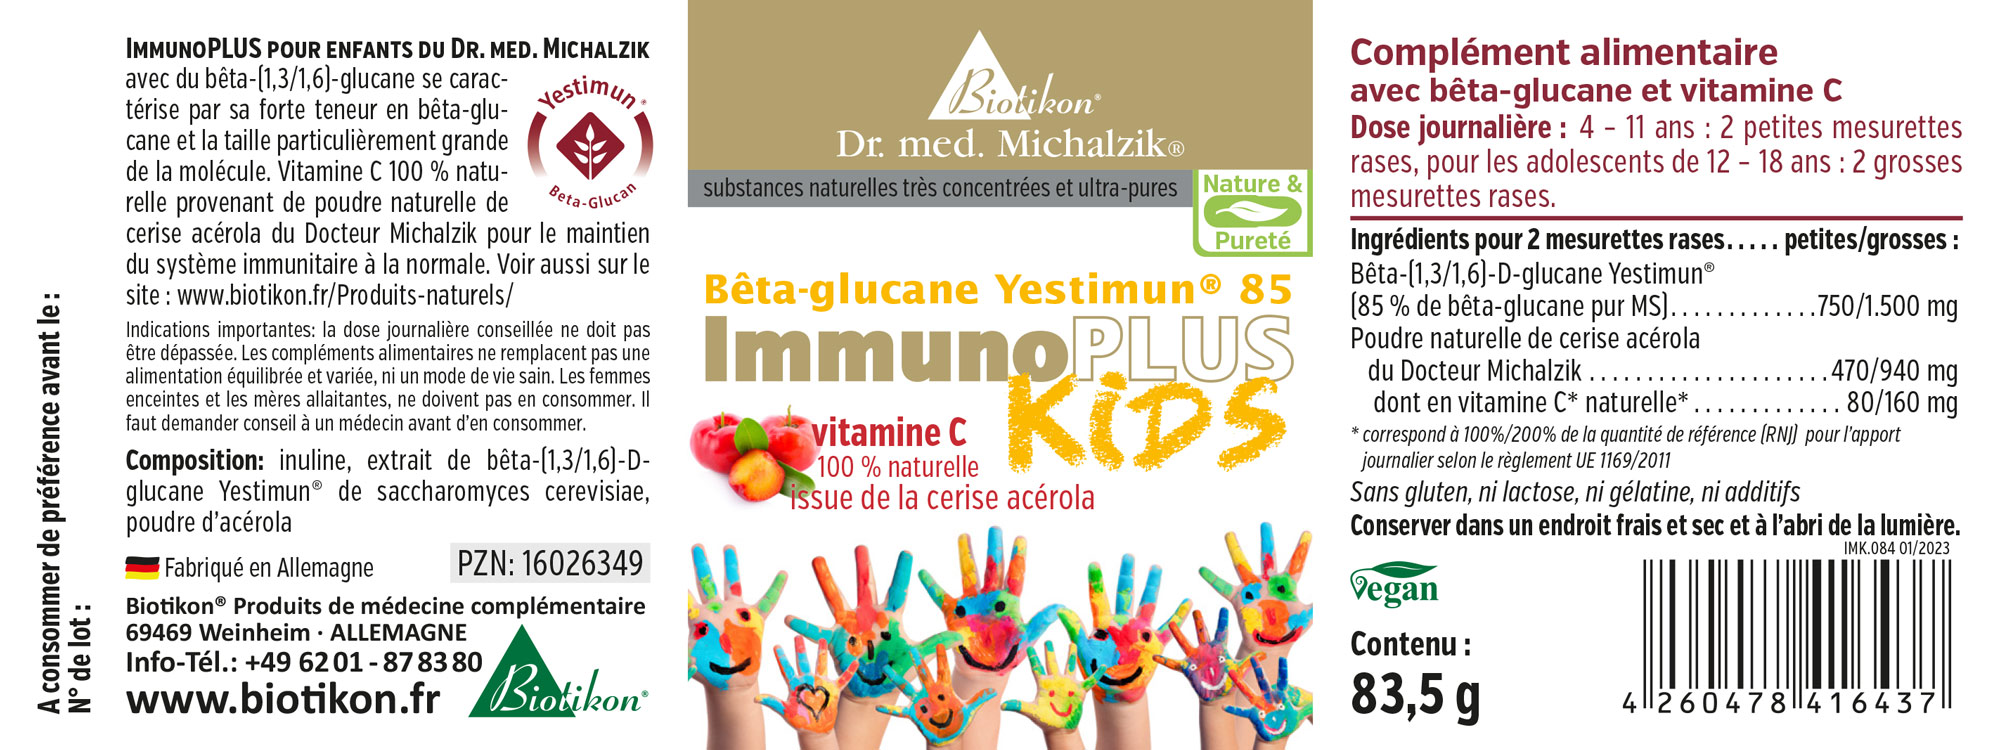 ImmunoPLUS Kids du Docteur Alexander Michalzik